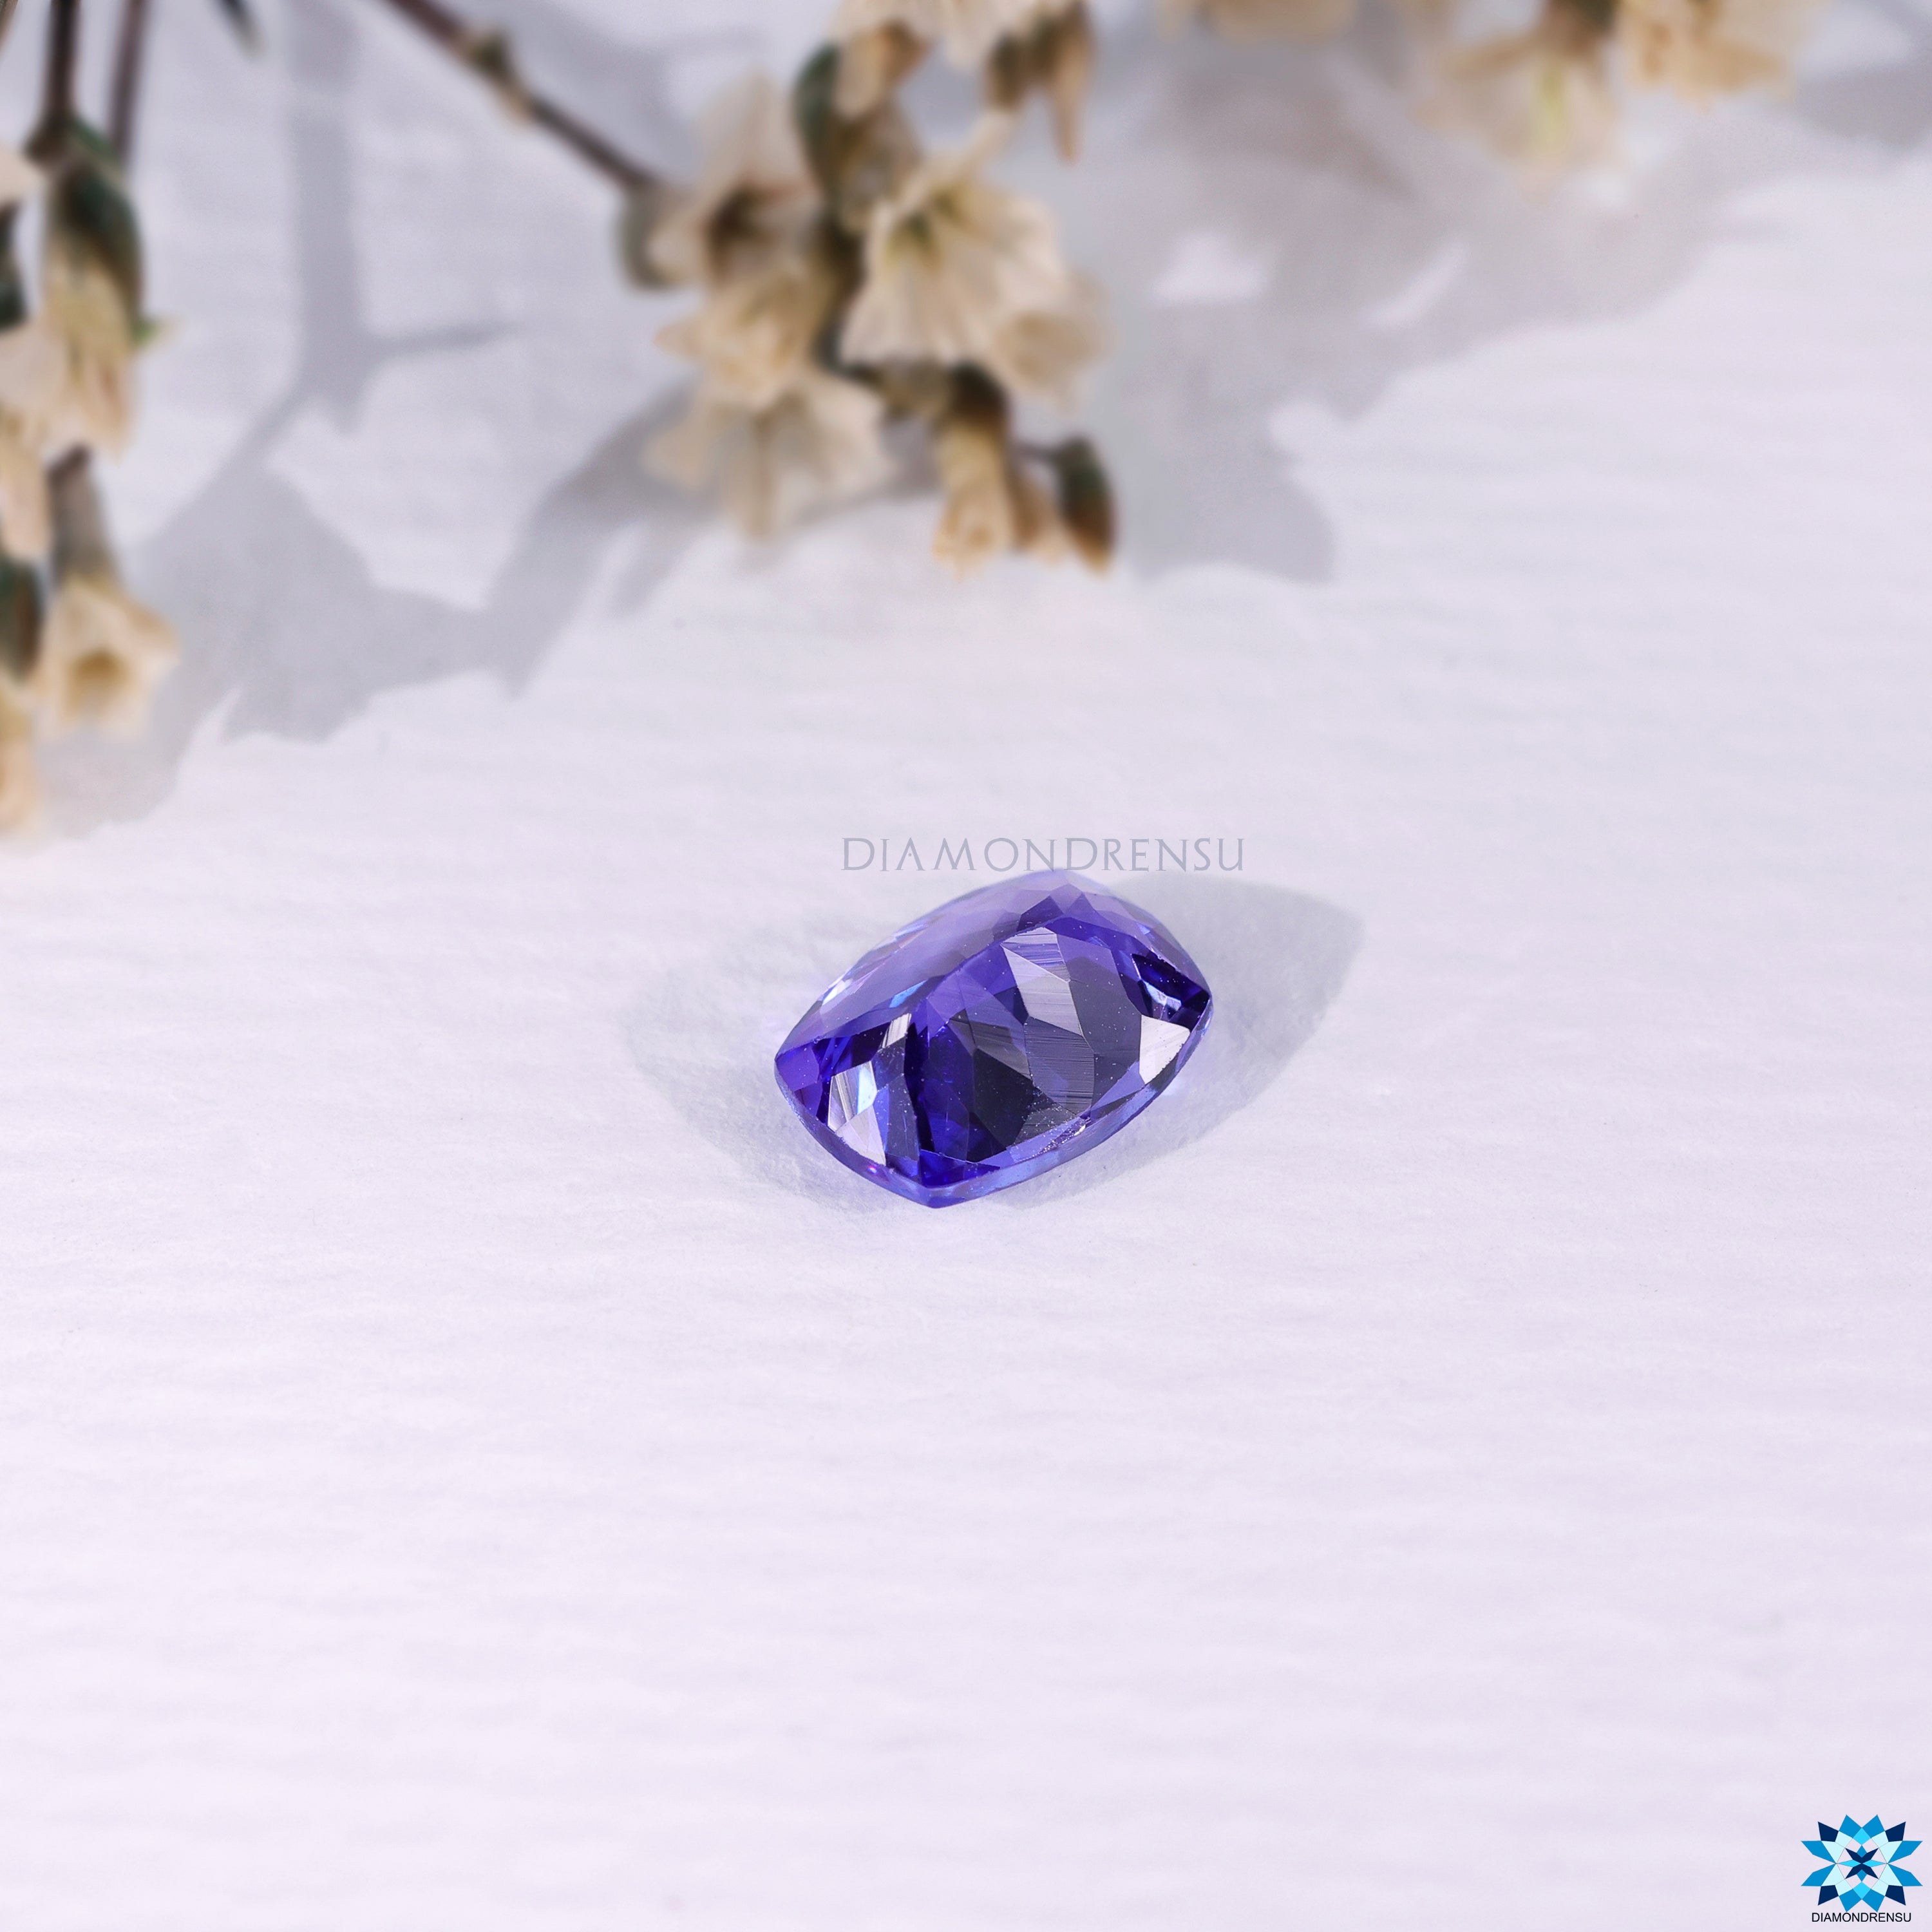 loose gemstone - diamondrensu